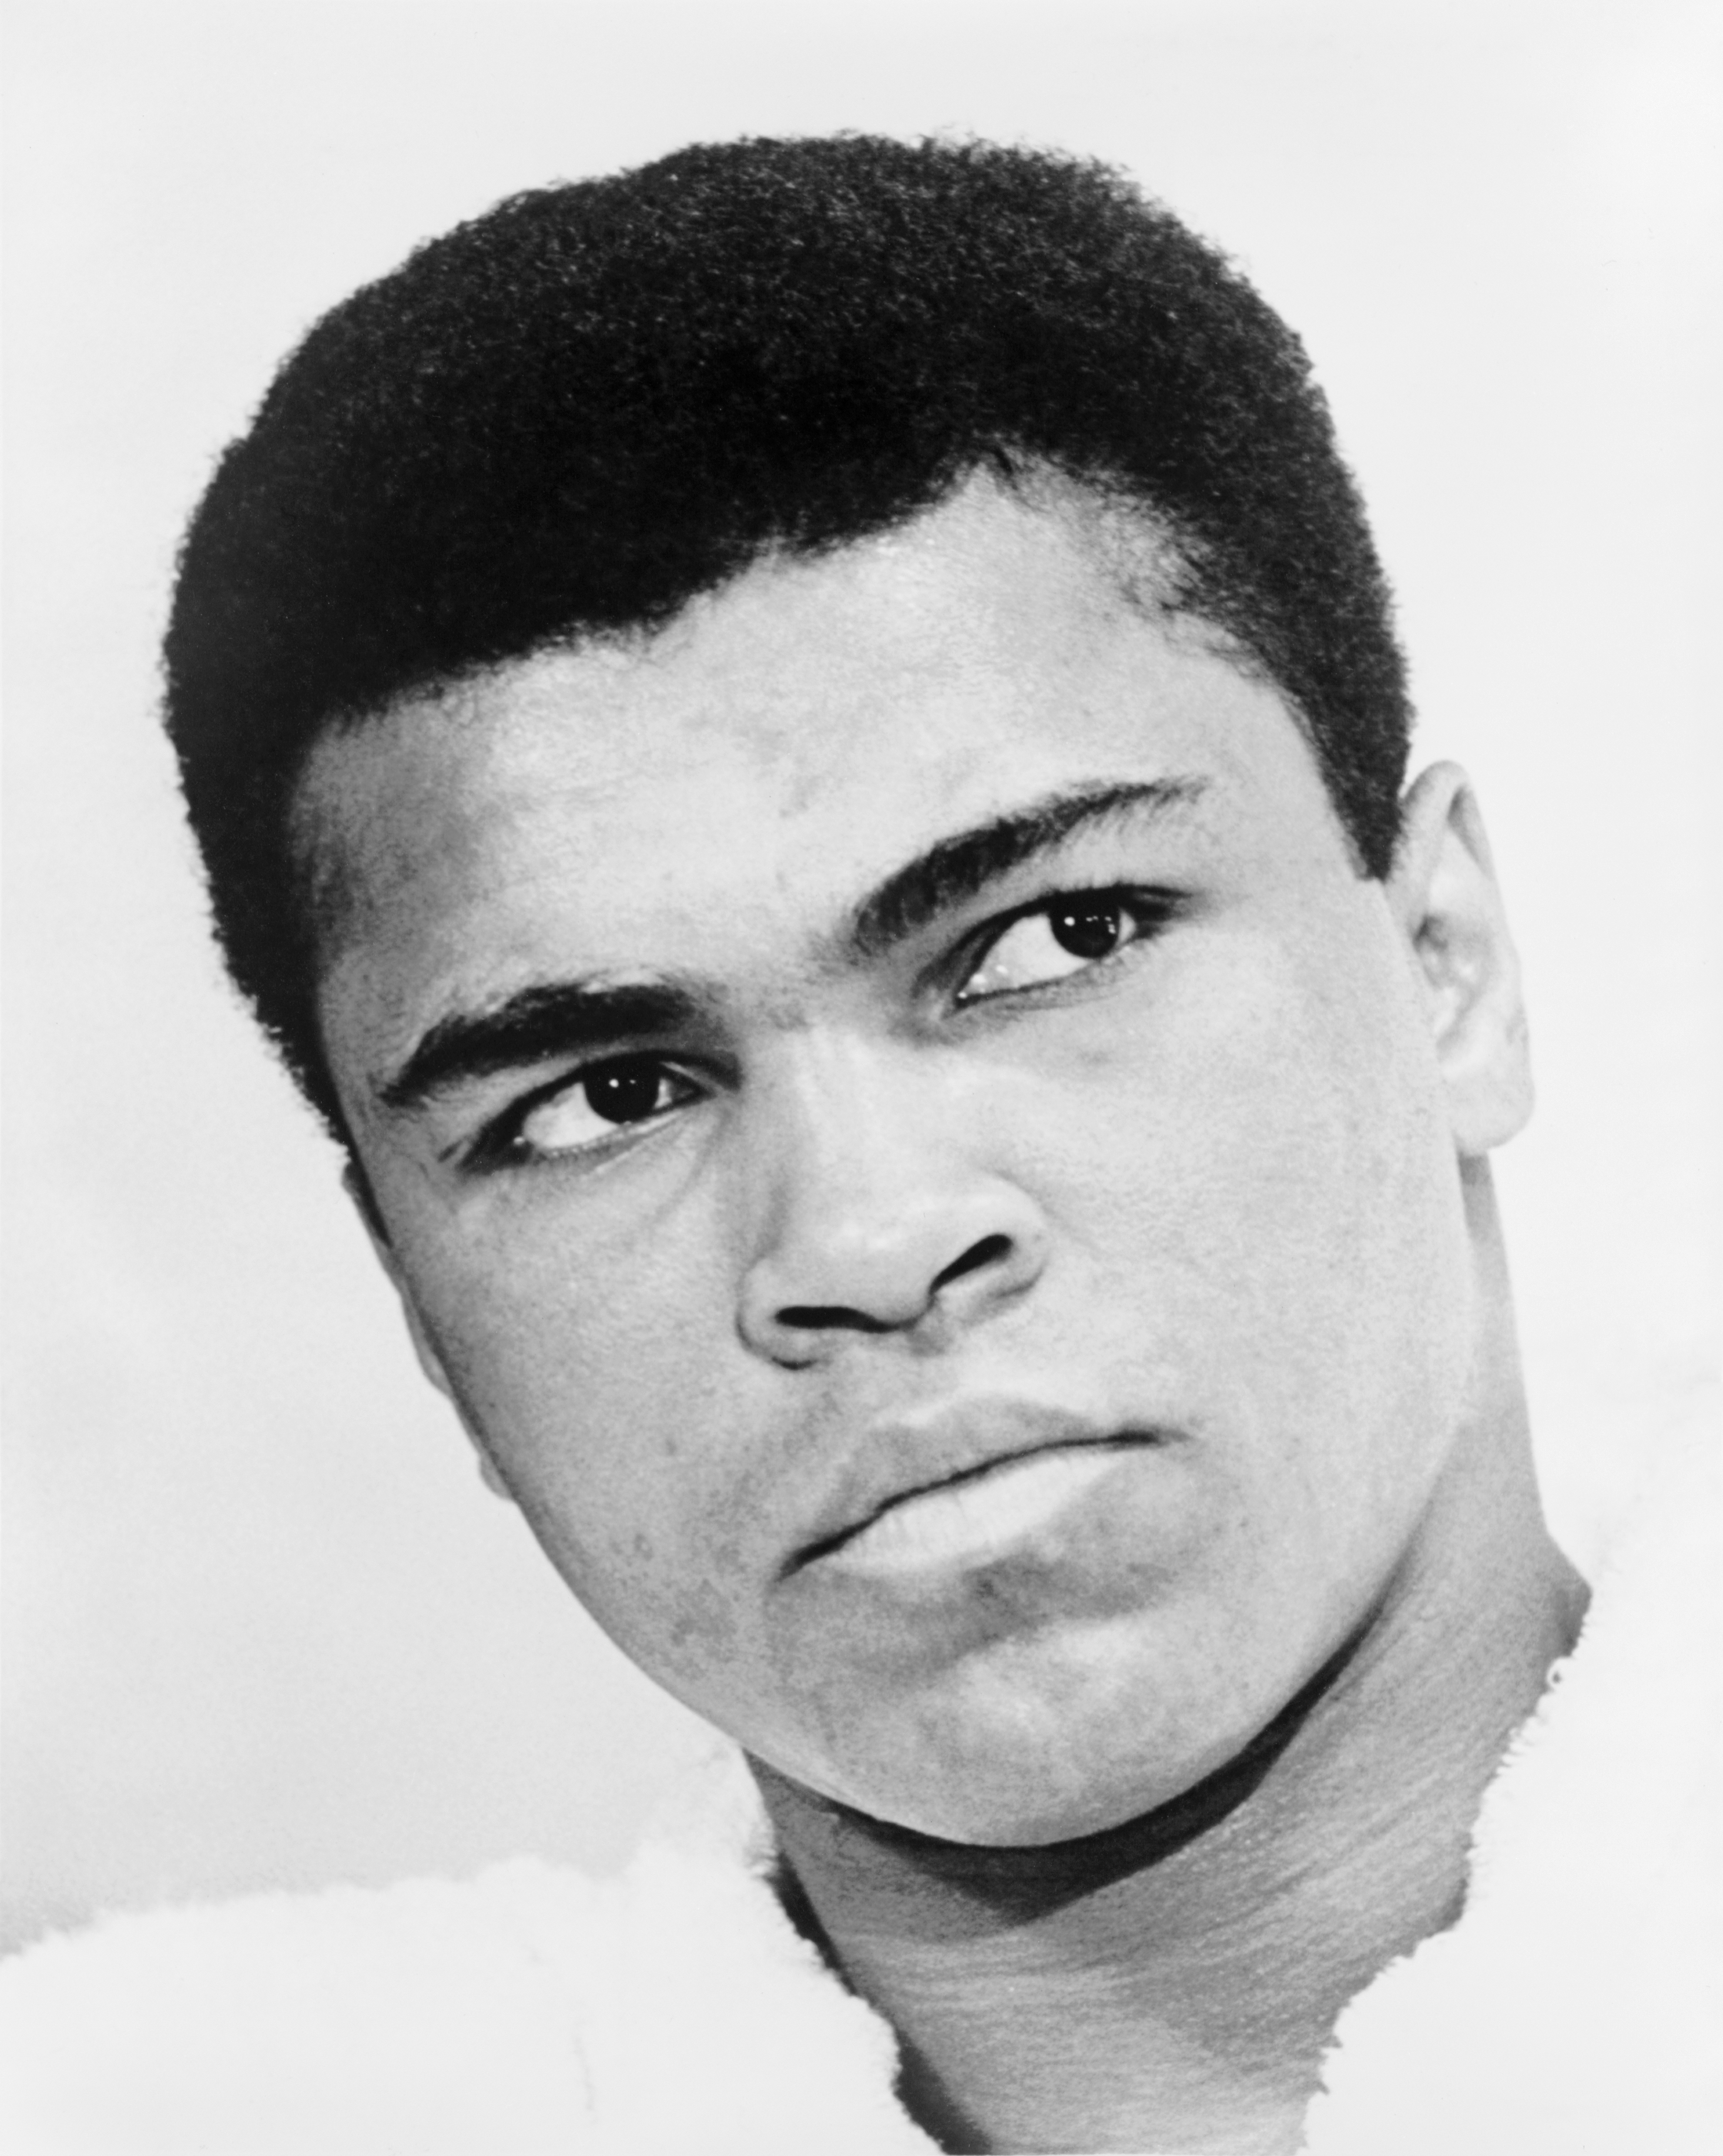 Quotes of Muhammad Ali